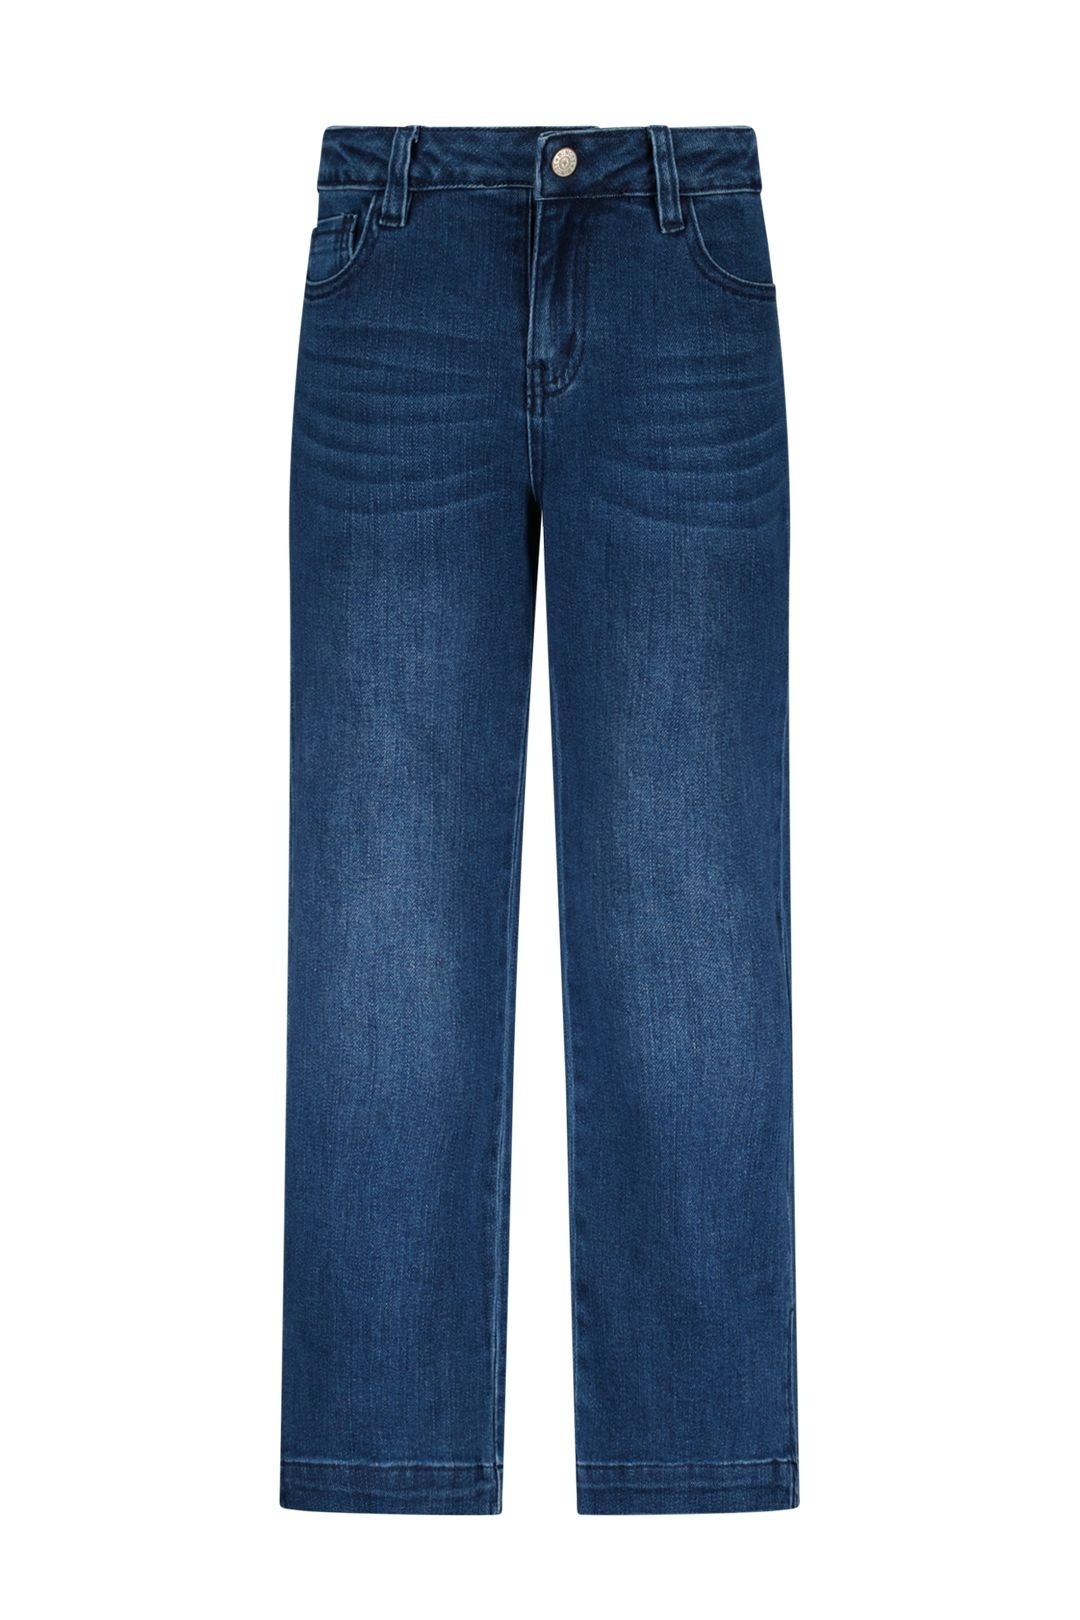 Meisjes jeans broek - Elif - Original denim